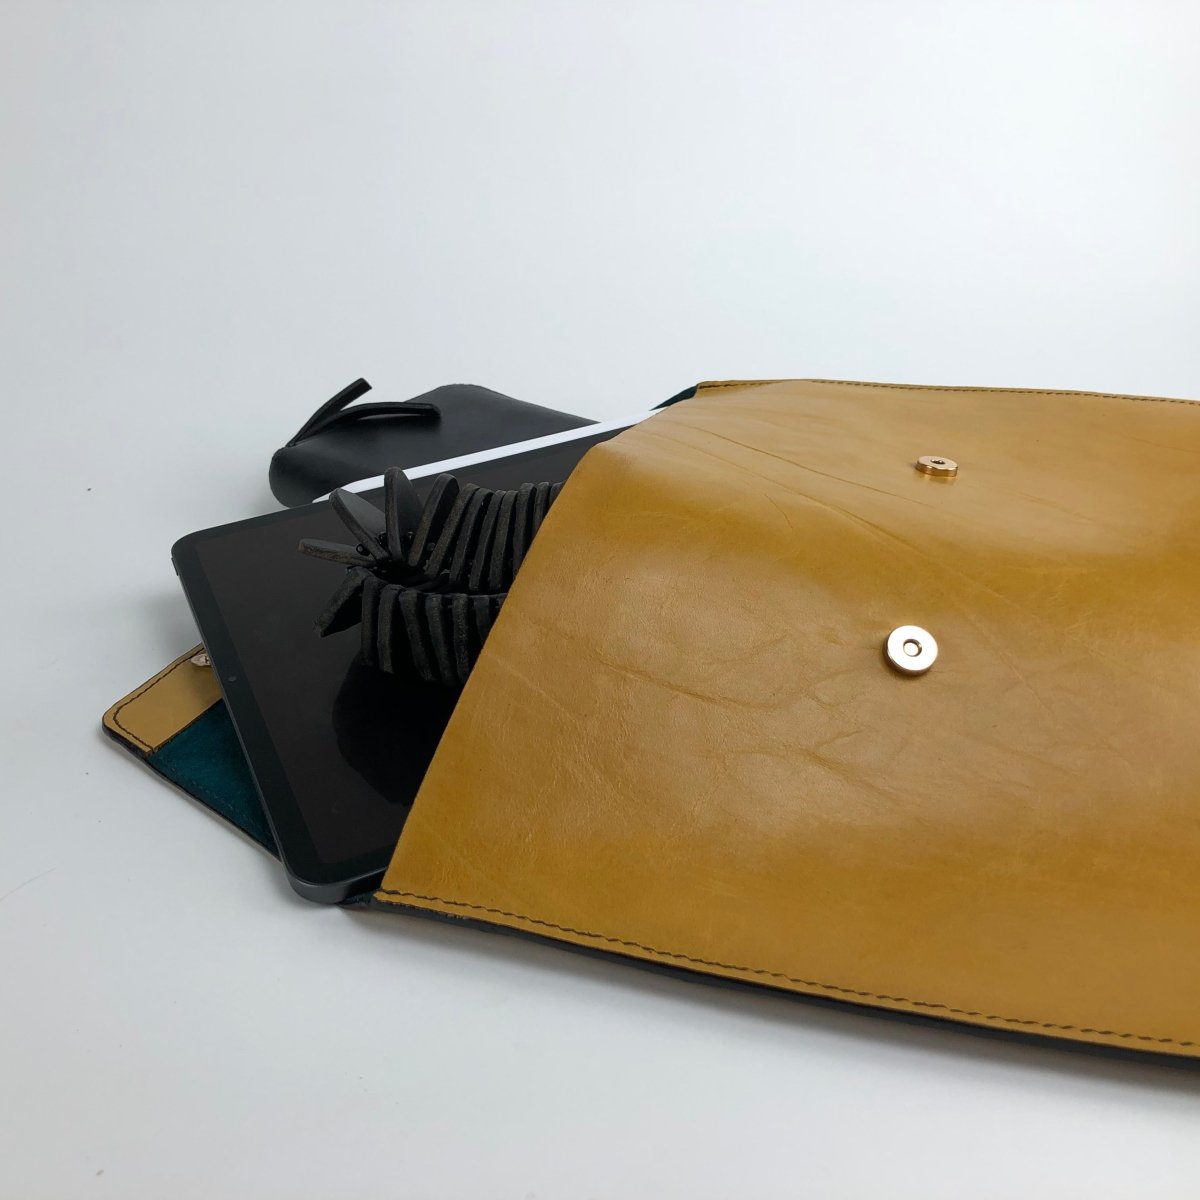 Oversized Envelope Clutch (Various Colours) - Hart & Hive